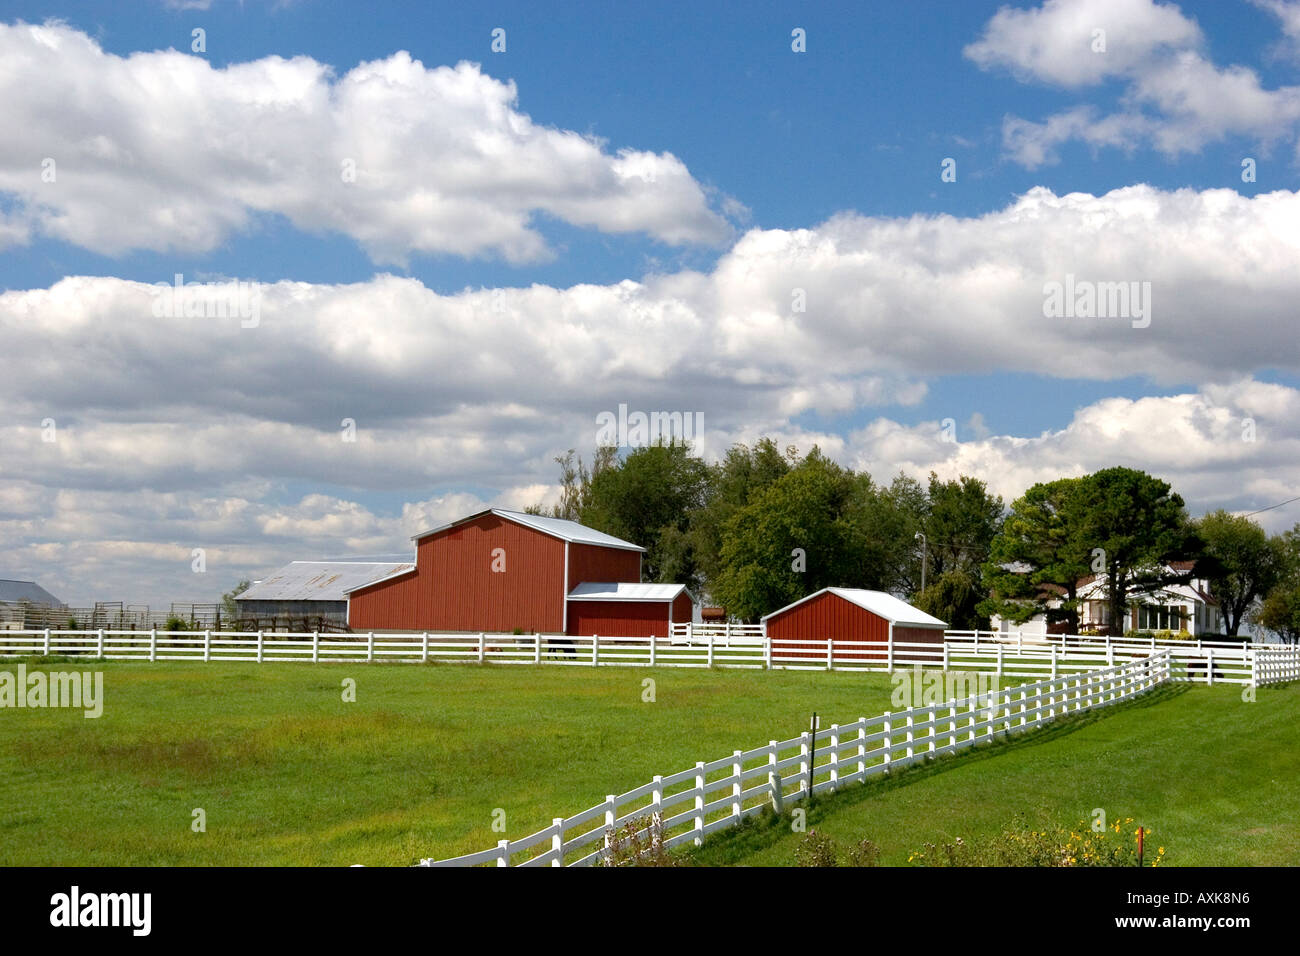 A red barn and farm at Pamona Kansas Stock Photo